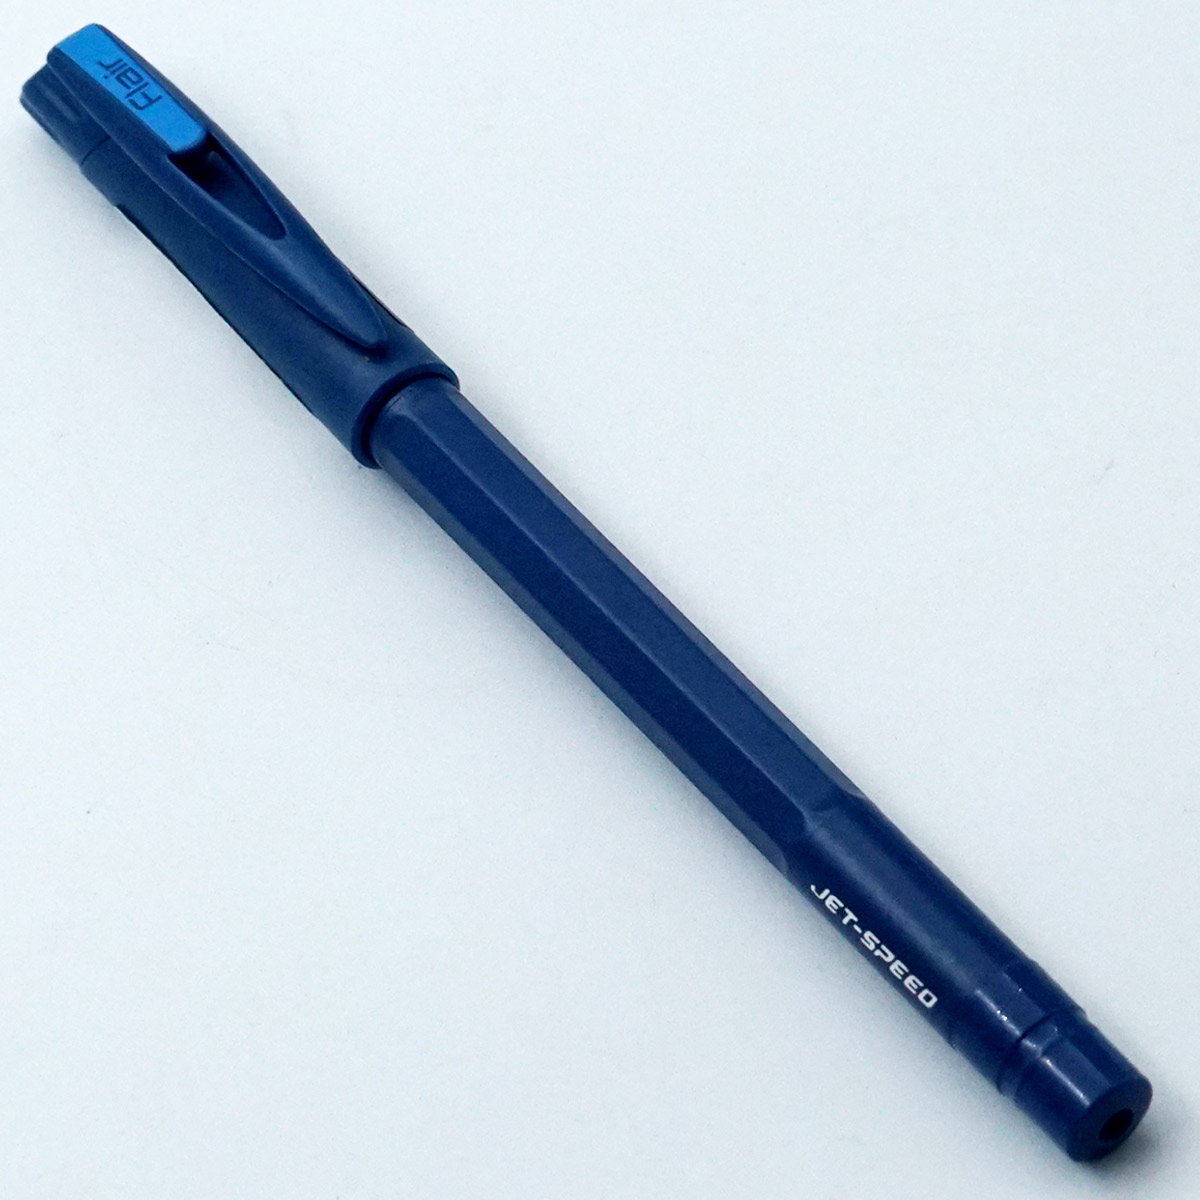 Flair Jet Speed Blue Color Body With Cap Fine Tip Blue Writing Cap Type Gel Pen SKU 23456